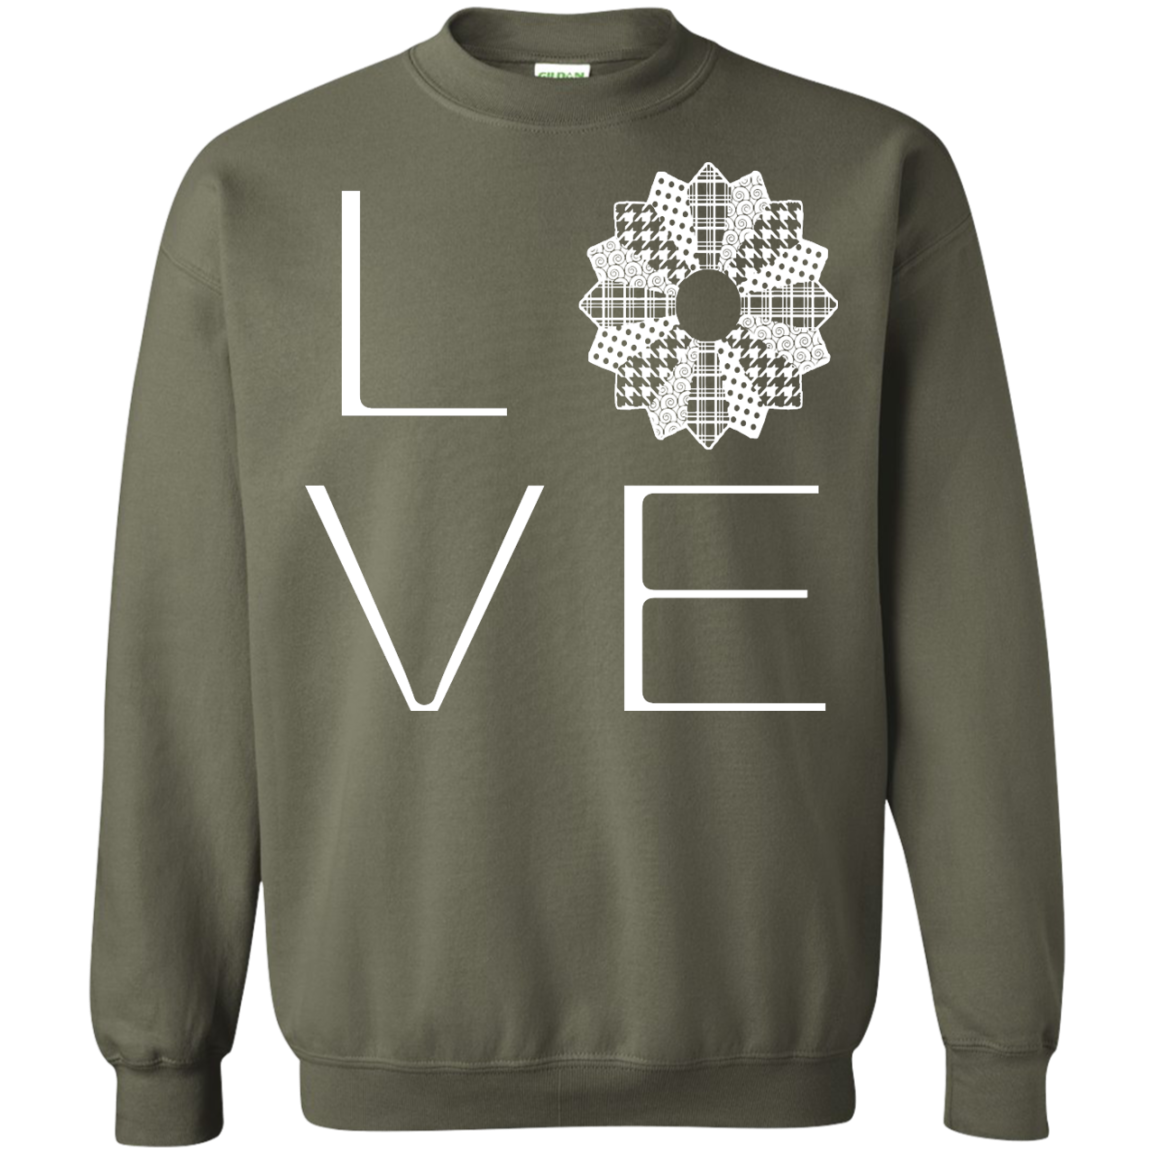 LOVE Quilting Crewneck Sweatshirts - Crafter4Life - 9